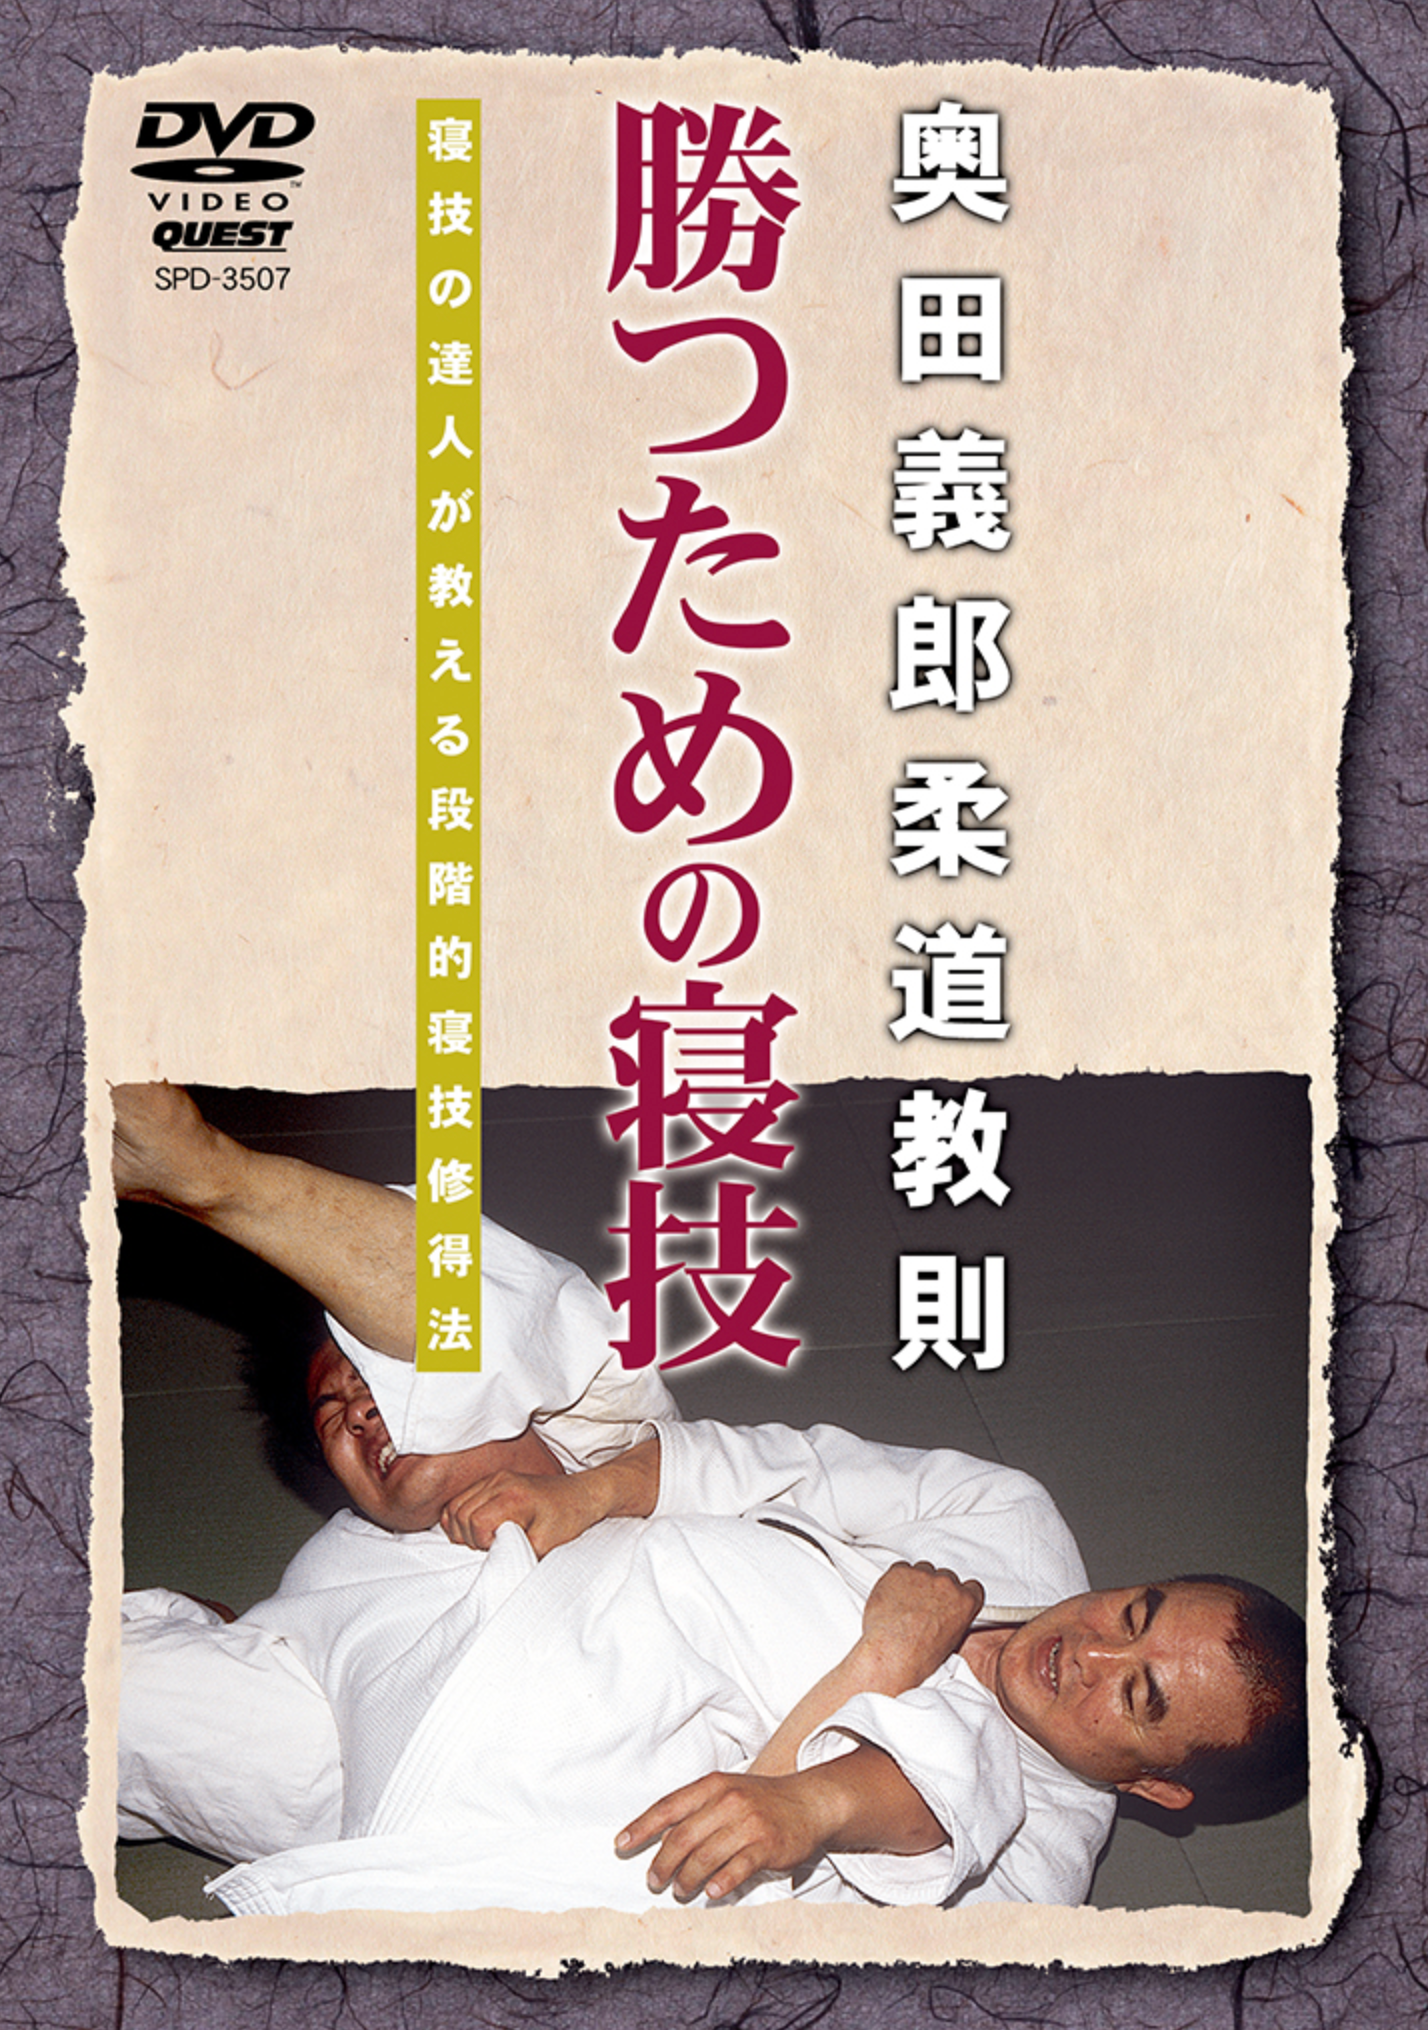 How to Win with Groundfighting (Katsu no Tame Newaza) DVD by Okada - Budovideos Inc